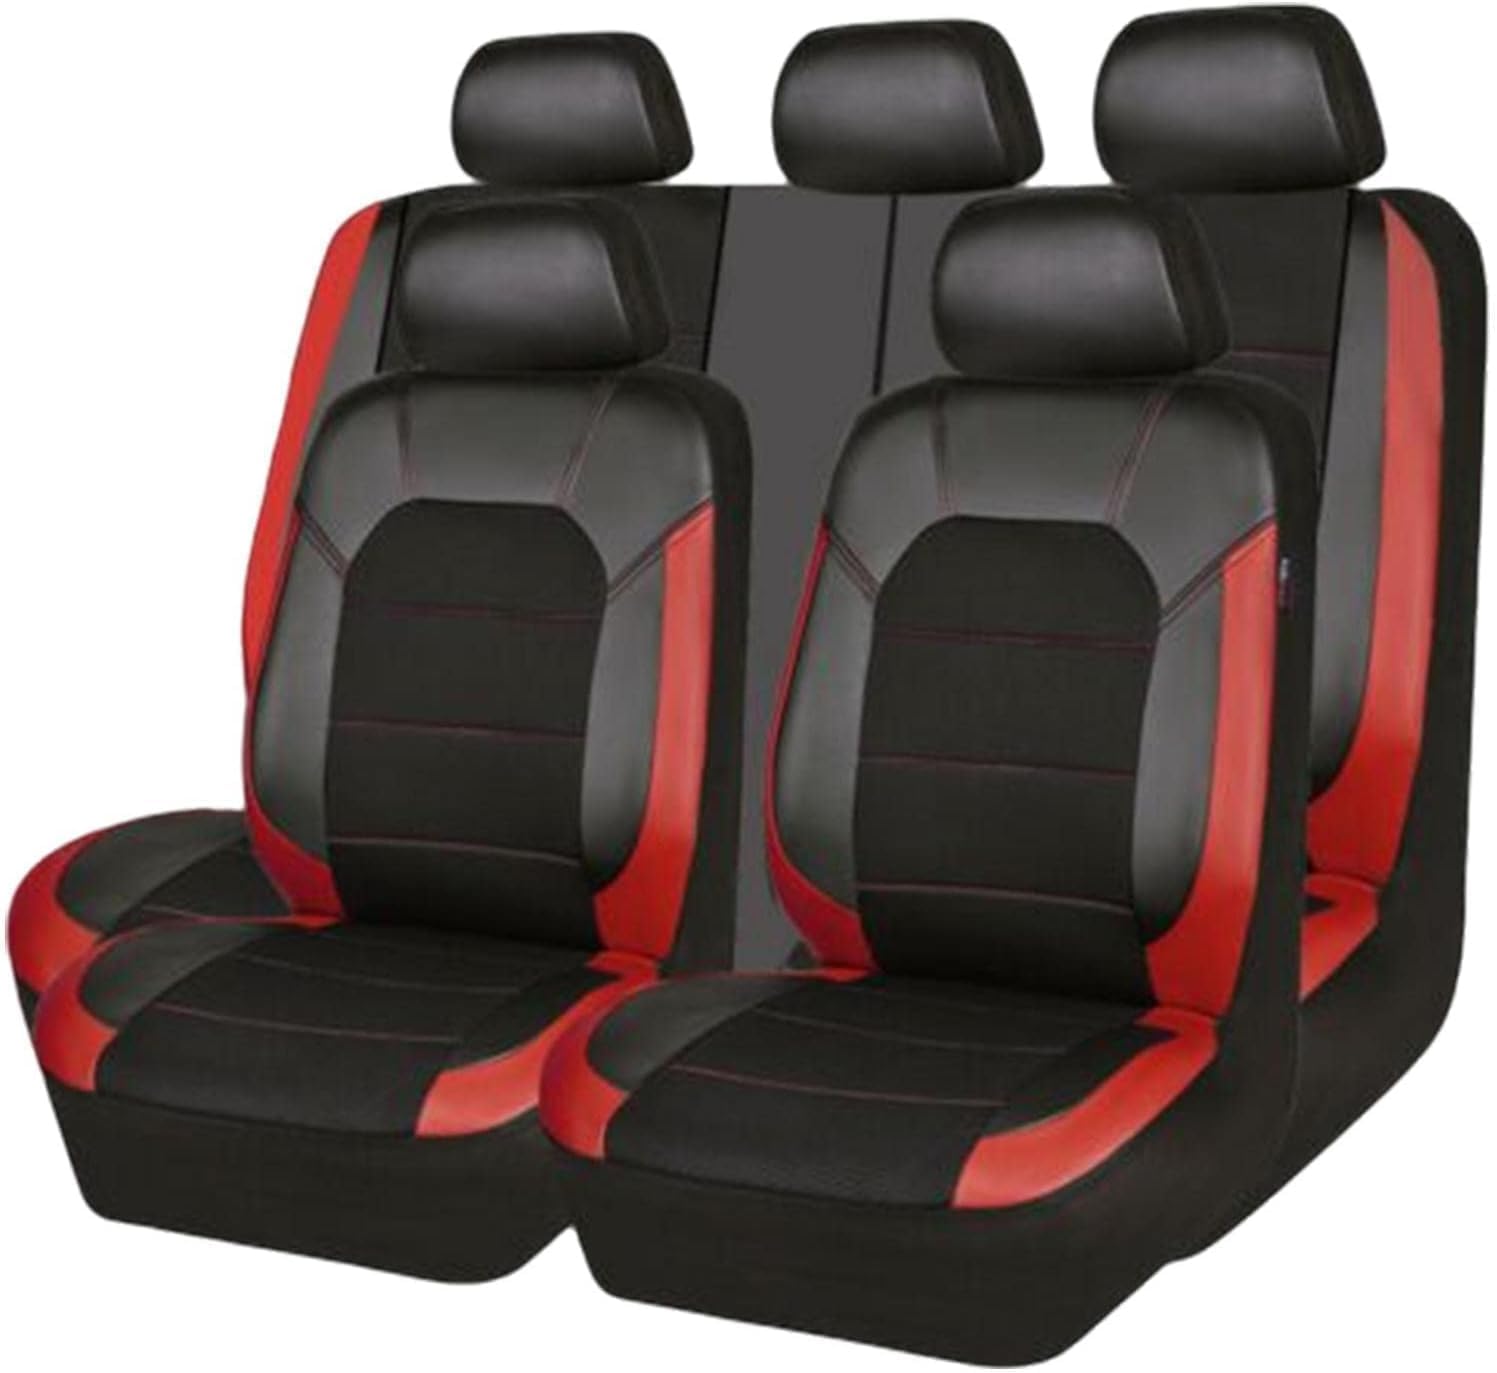 IMAF Leder Autositzbezüge Sets für Toyota RAV-4 LWB/Vanguard 2007-2012, 9-teiliges Set Sitzbezug Komplett-Set, Atmungsaktiv Komfortable Allwetter Autositzschoner,A/Red von IMAF